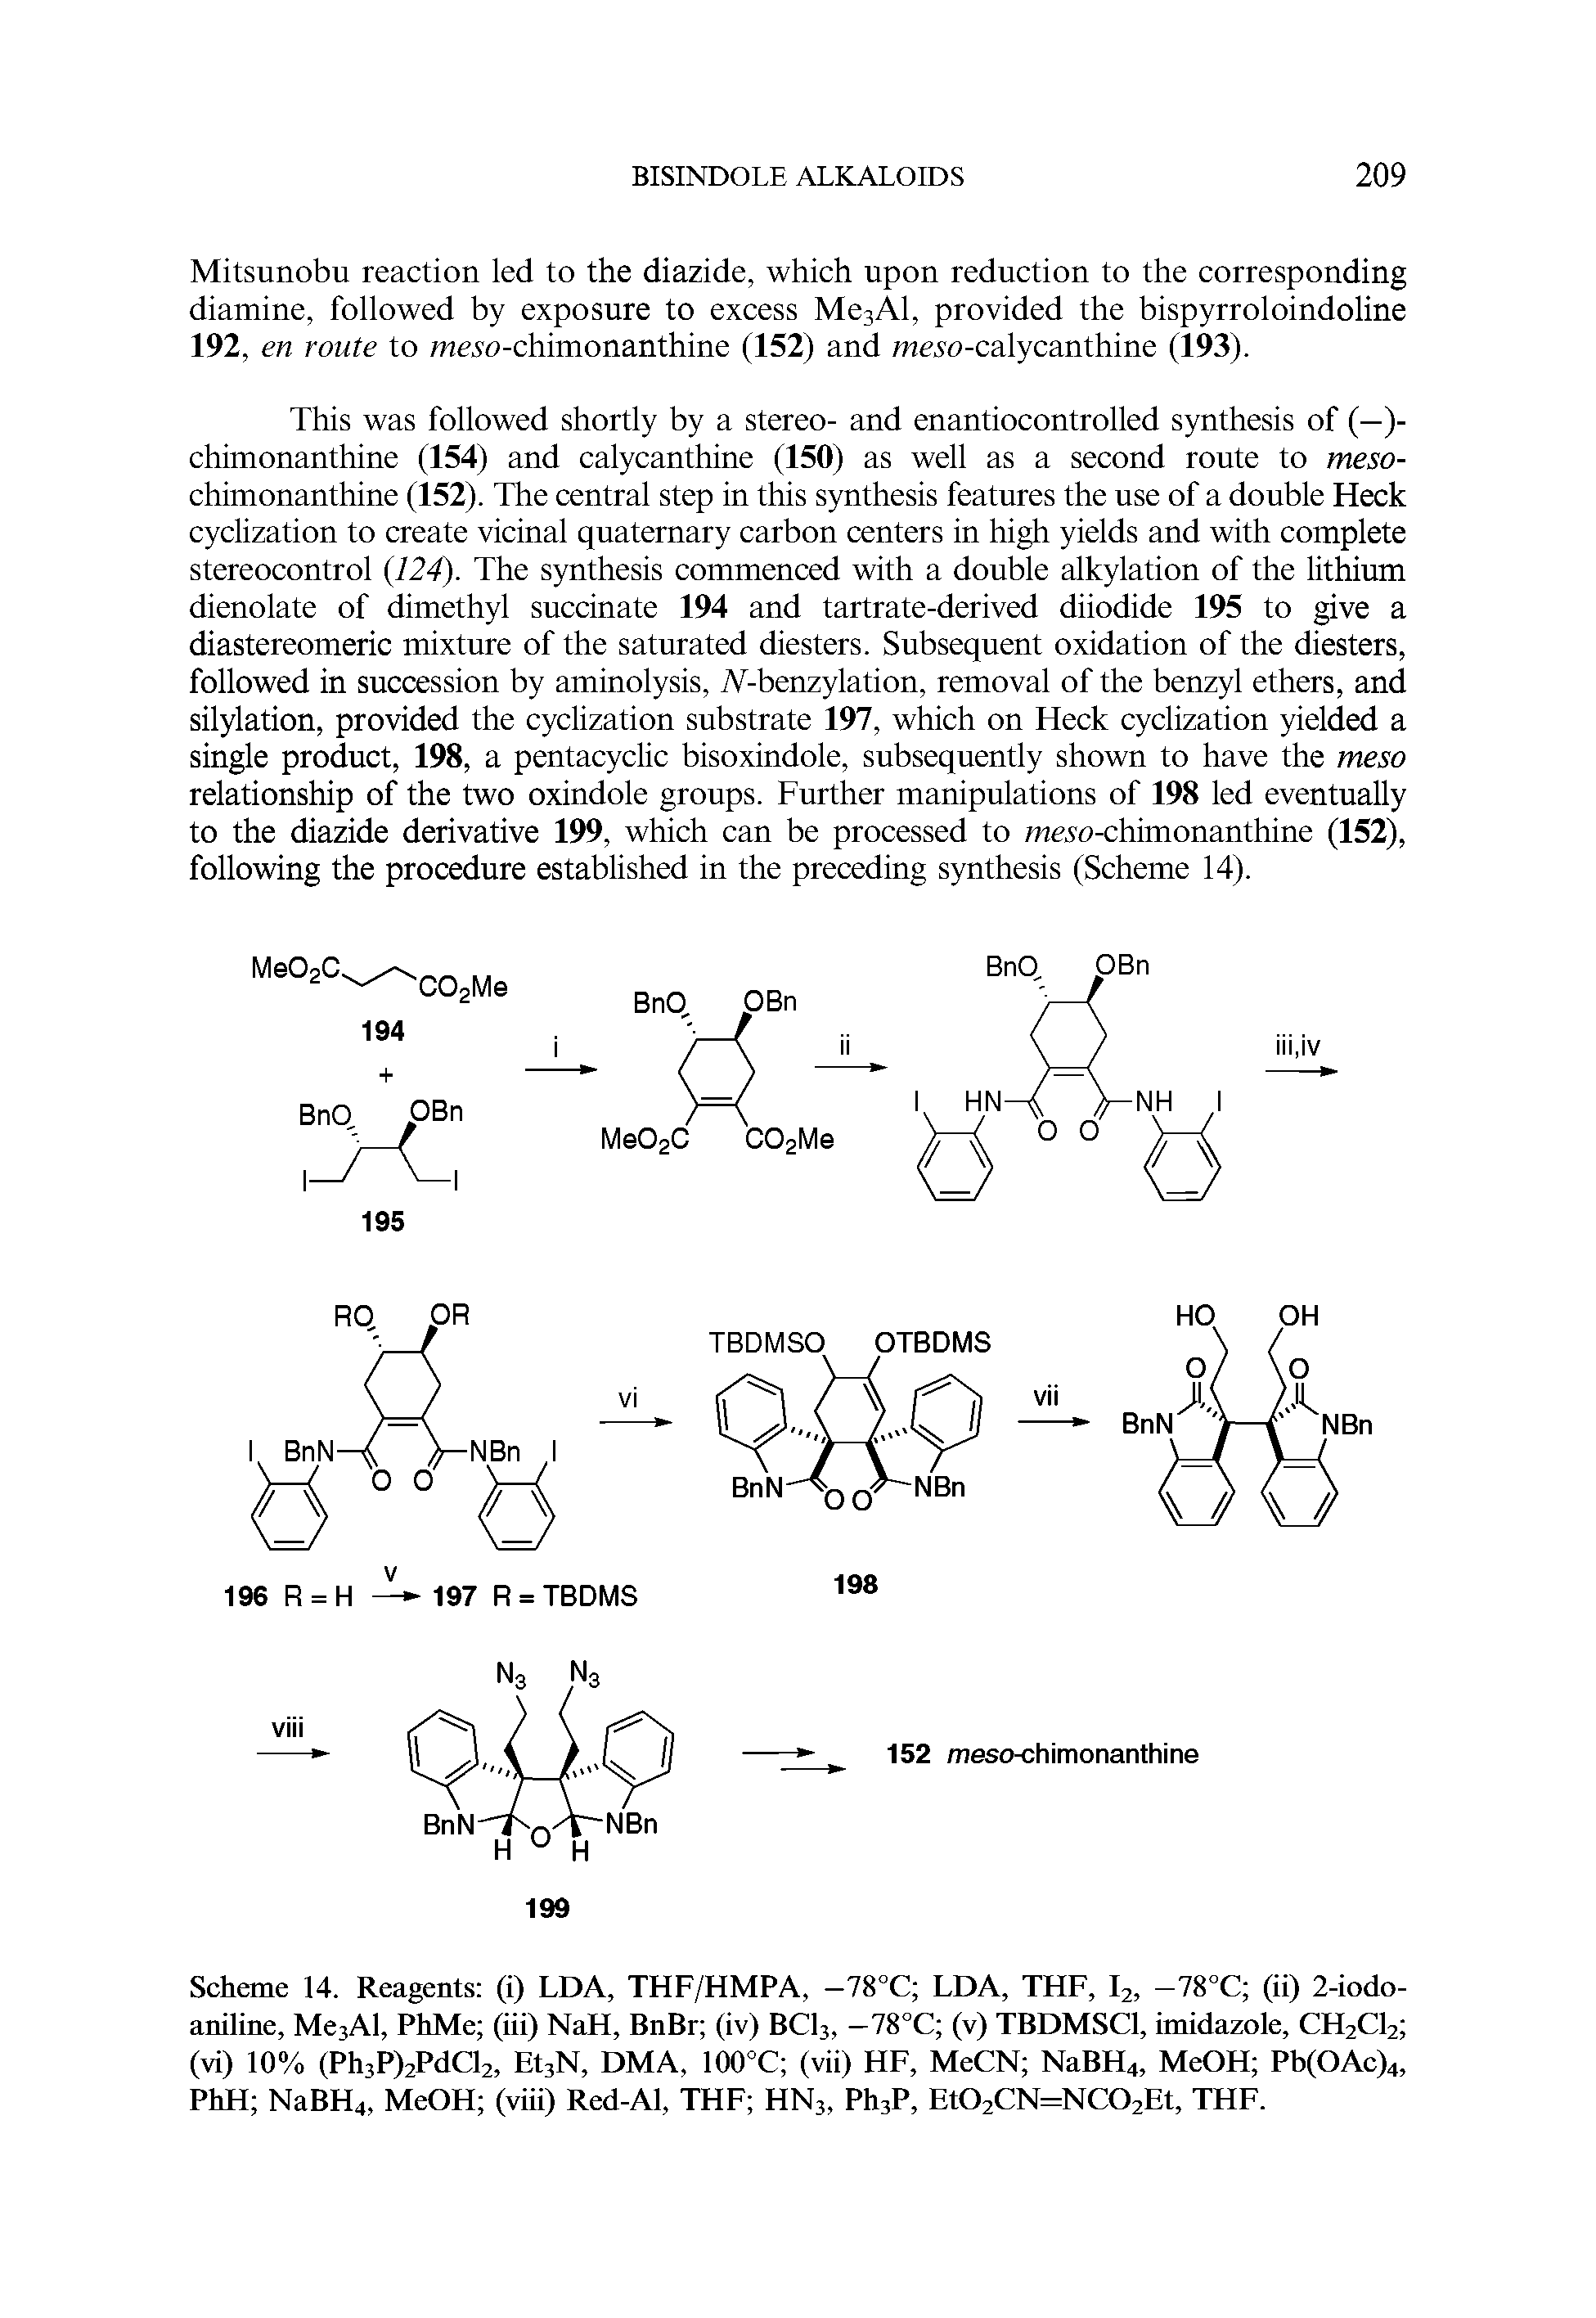 Scheme 14. Reagents (0 LDA, THF/HMPA, -78°C LDA, THF, -78°C (ii) 2-iodo-aniline, MejAl, PhMe (iii) NaH, BnBr (iv) BClj, -78°C (v) TBDMSCl, imidazole, CH2CI2 (vi) 10% (PhjPfzPdQz, EtjN, DMA, 100°C (vii) HF, MeCN NaBH4, MeOH Pb(OAc)4, PhH NaBH4, MeOH (viii) Red-Al, THF HNj, PhjP, EtOzCN NCOzEt, THF.